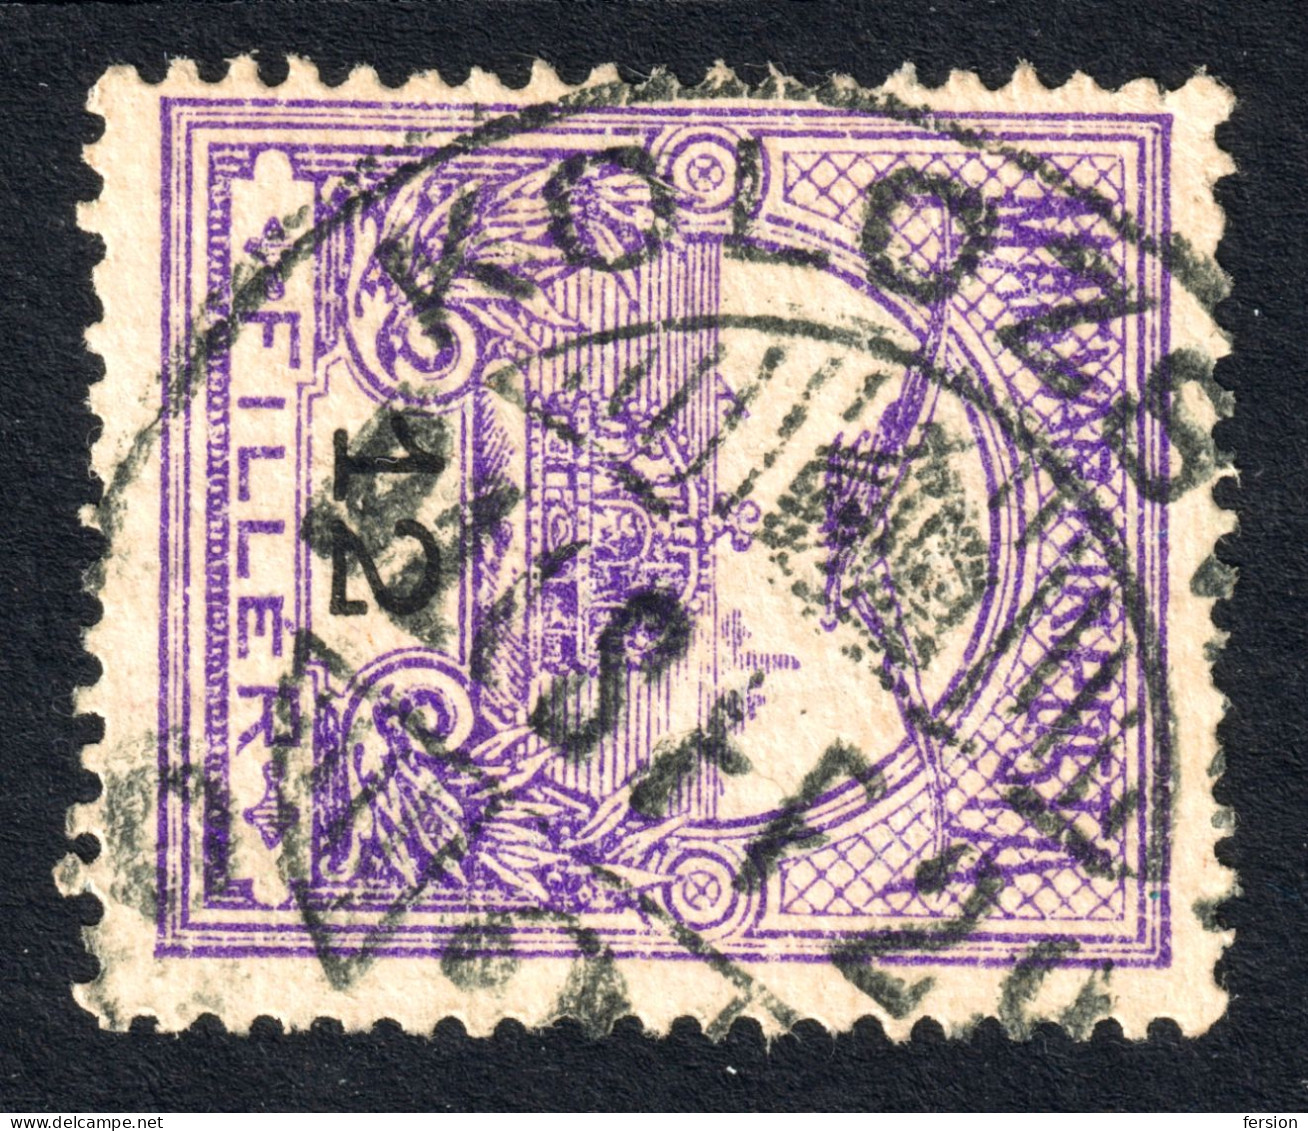 KOLOZSVÁR CLUJ-NAPOCA Postmark / TURUL Crown 1911 Hungary Romania Banat Transylvania KOLOZS County KuK K.u.K - 12 Fill - Siebenbürgen (Transsylvanien)